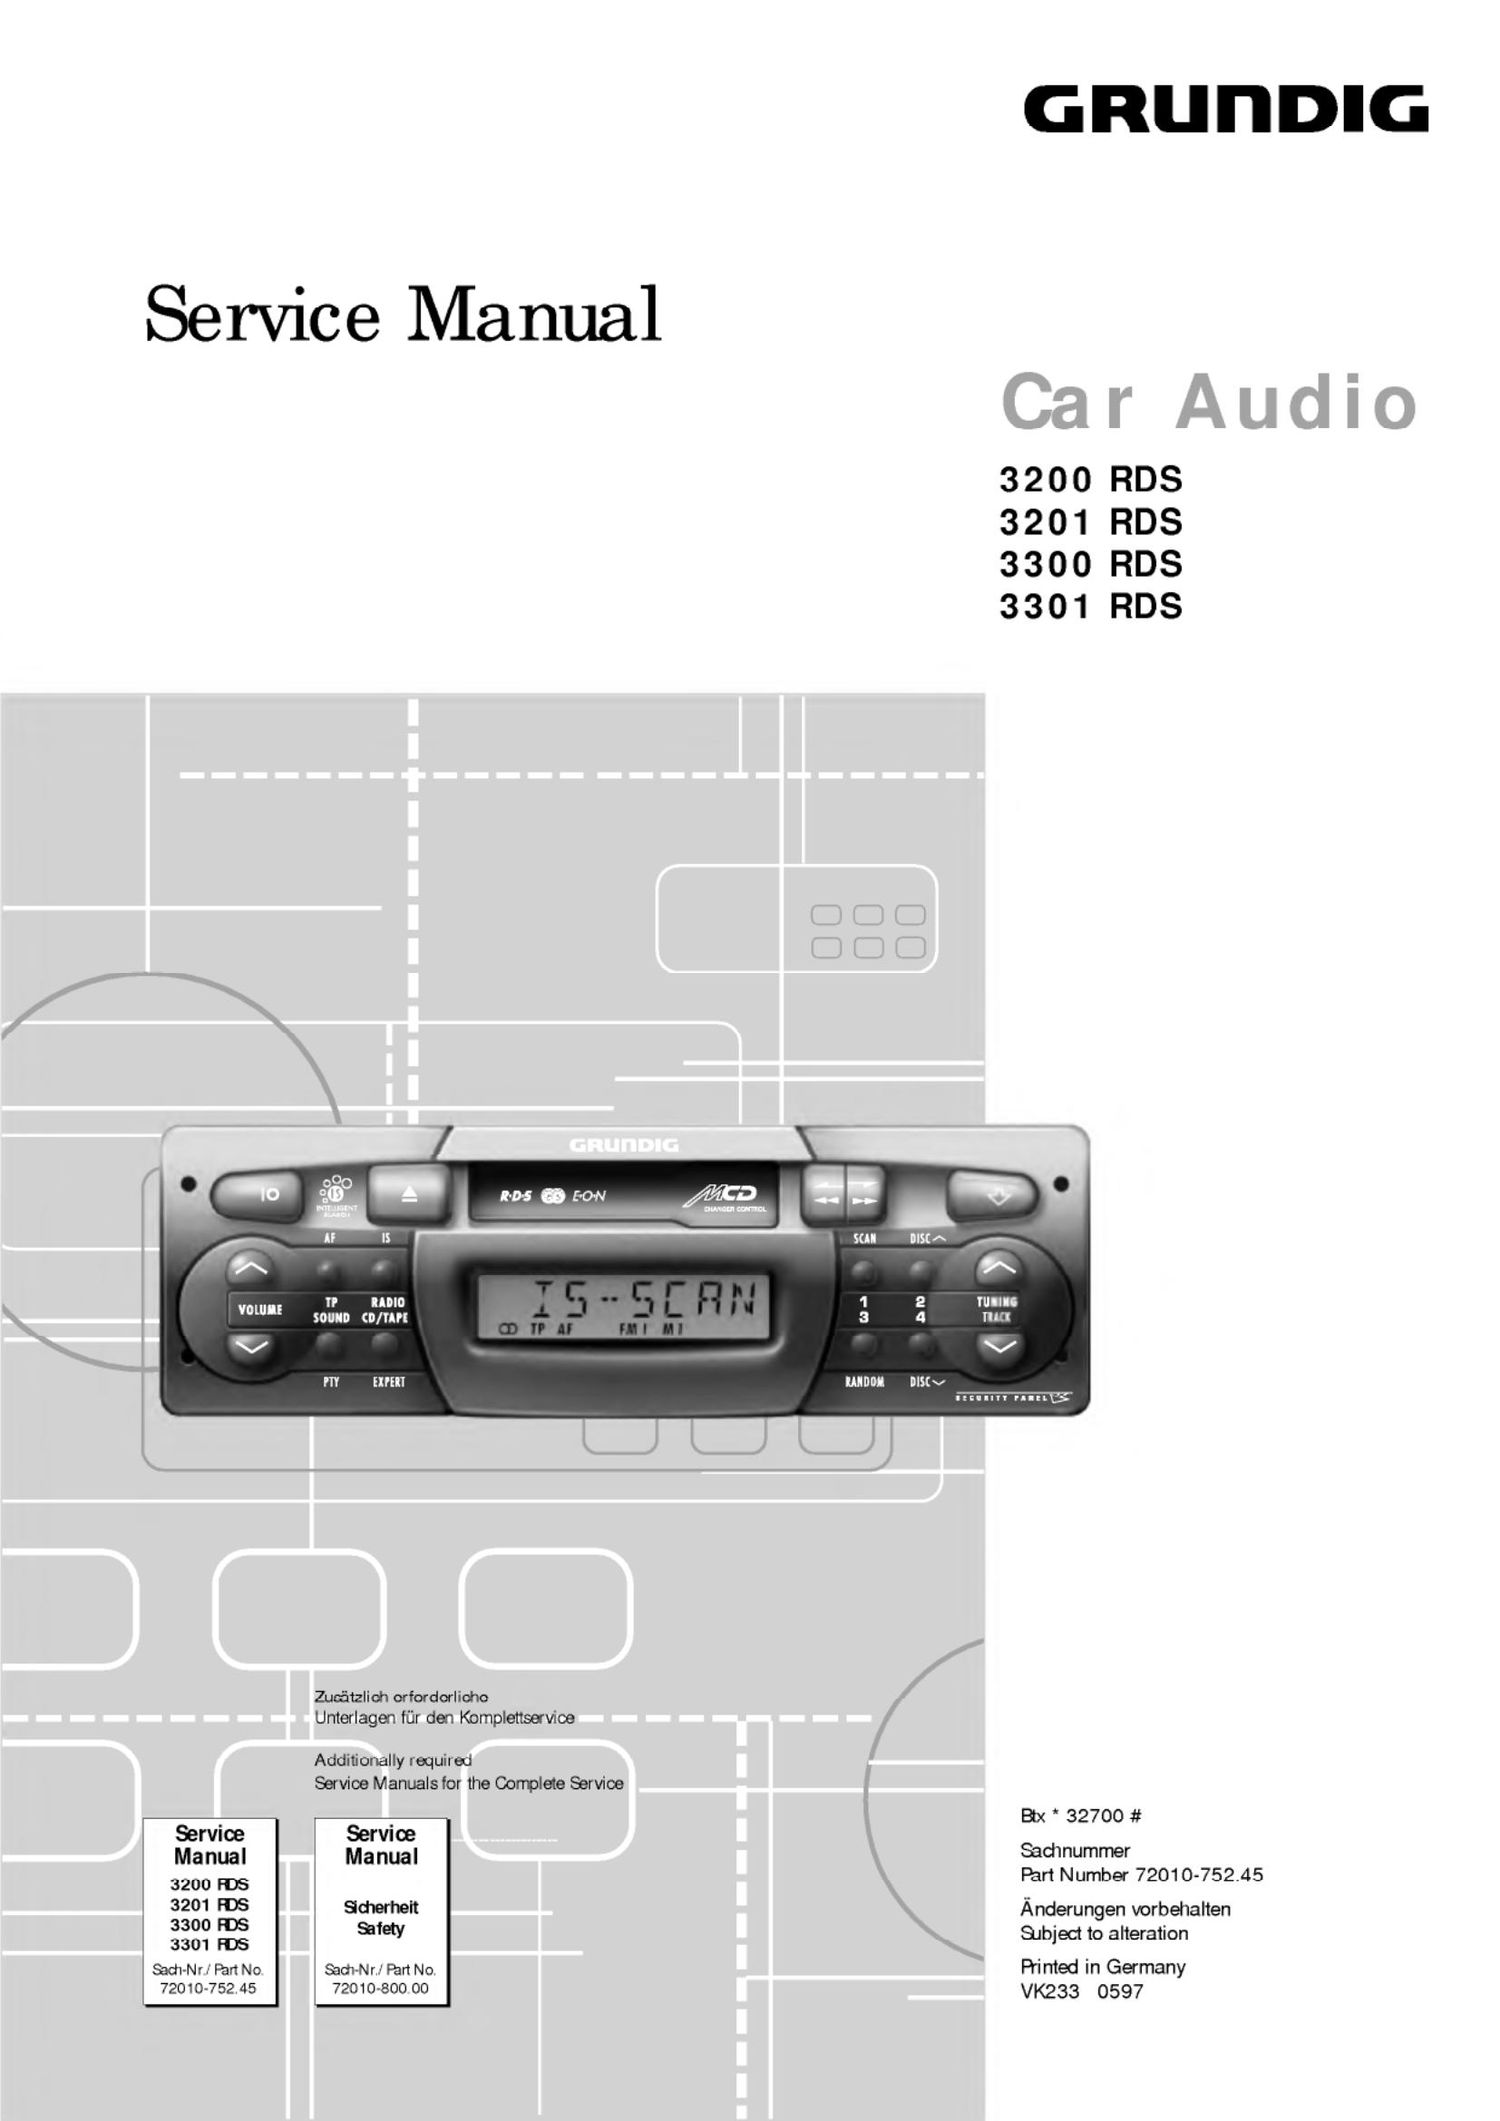 Grundig WKC 3300 RDS Service Manual